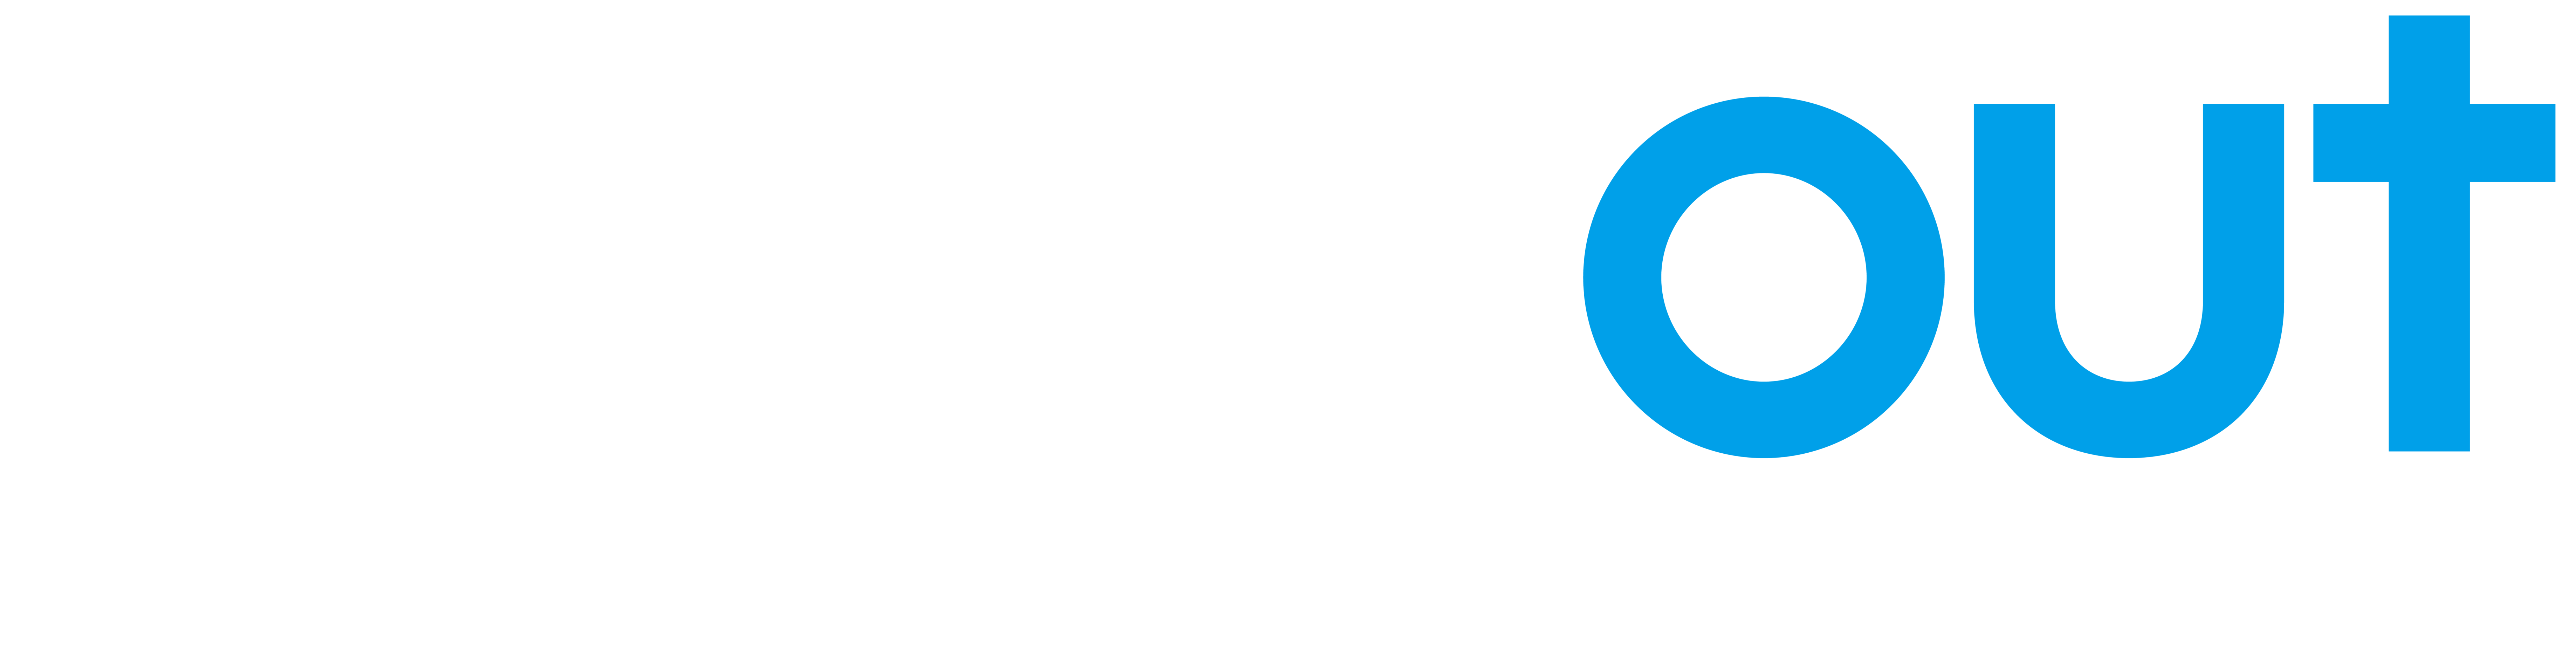 gogoout logo